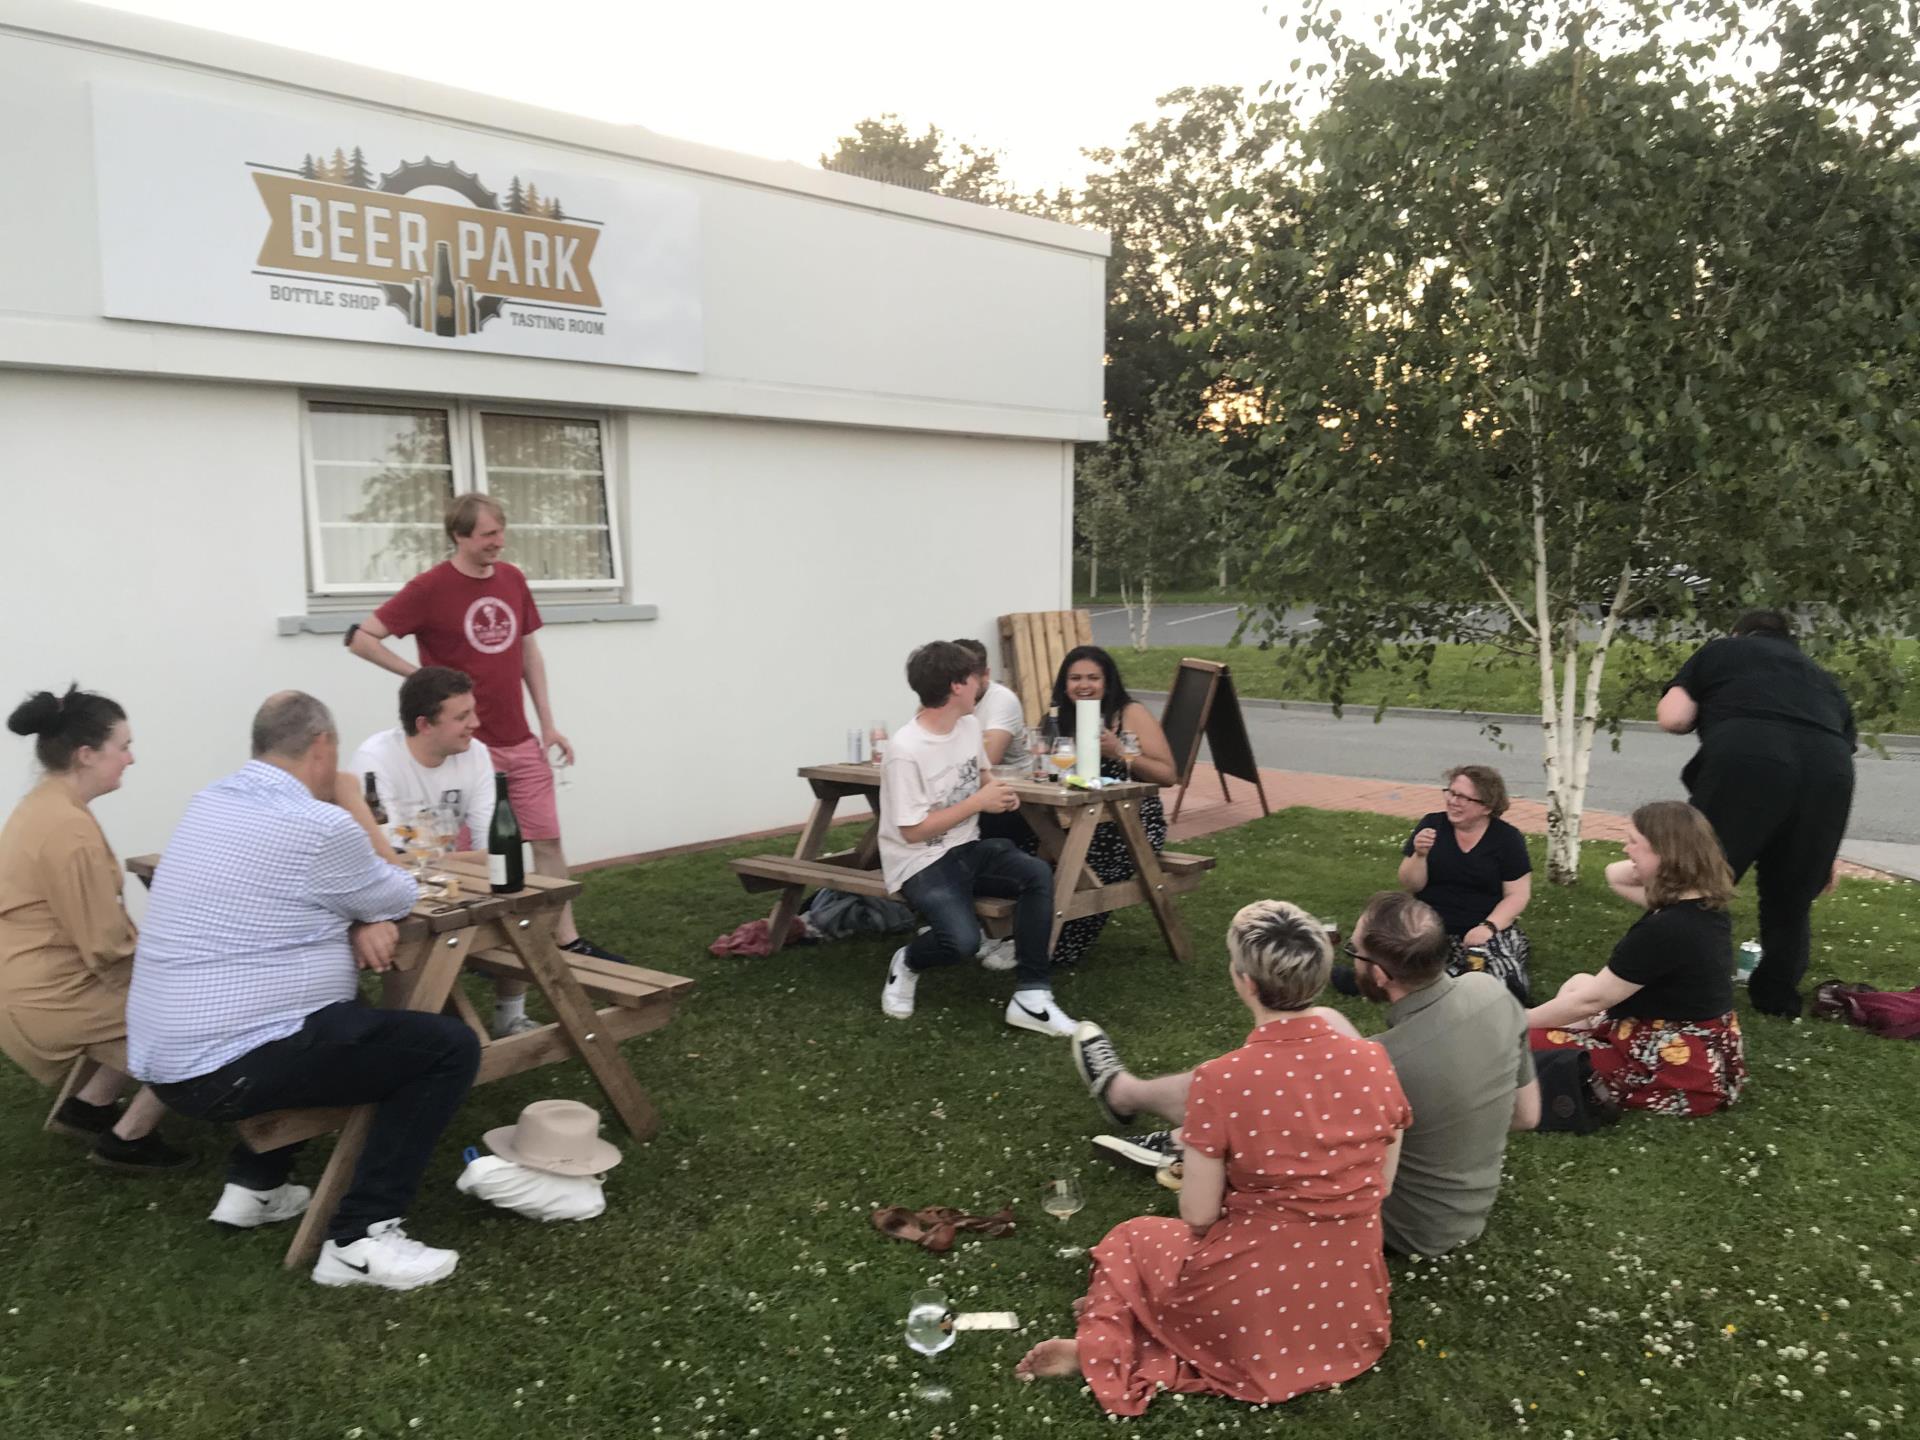 The Beer Park beer lawn.